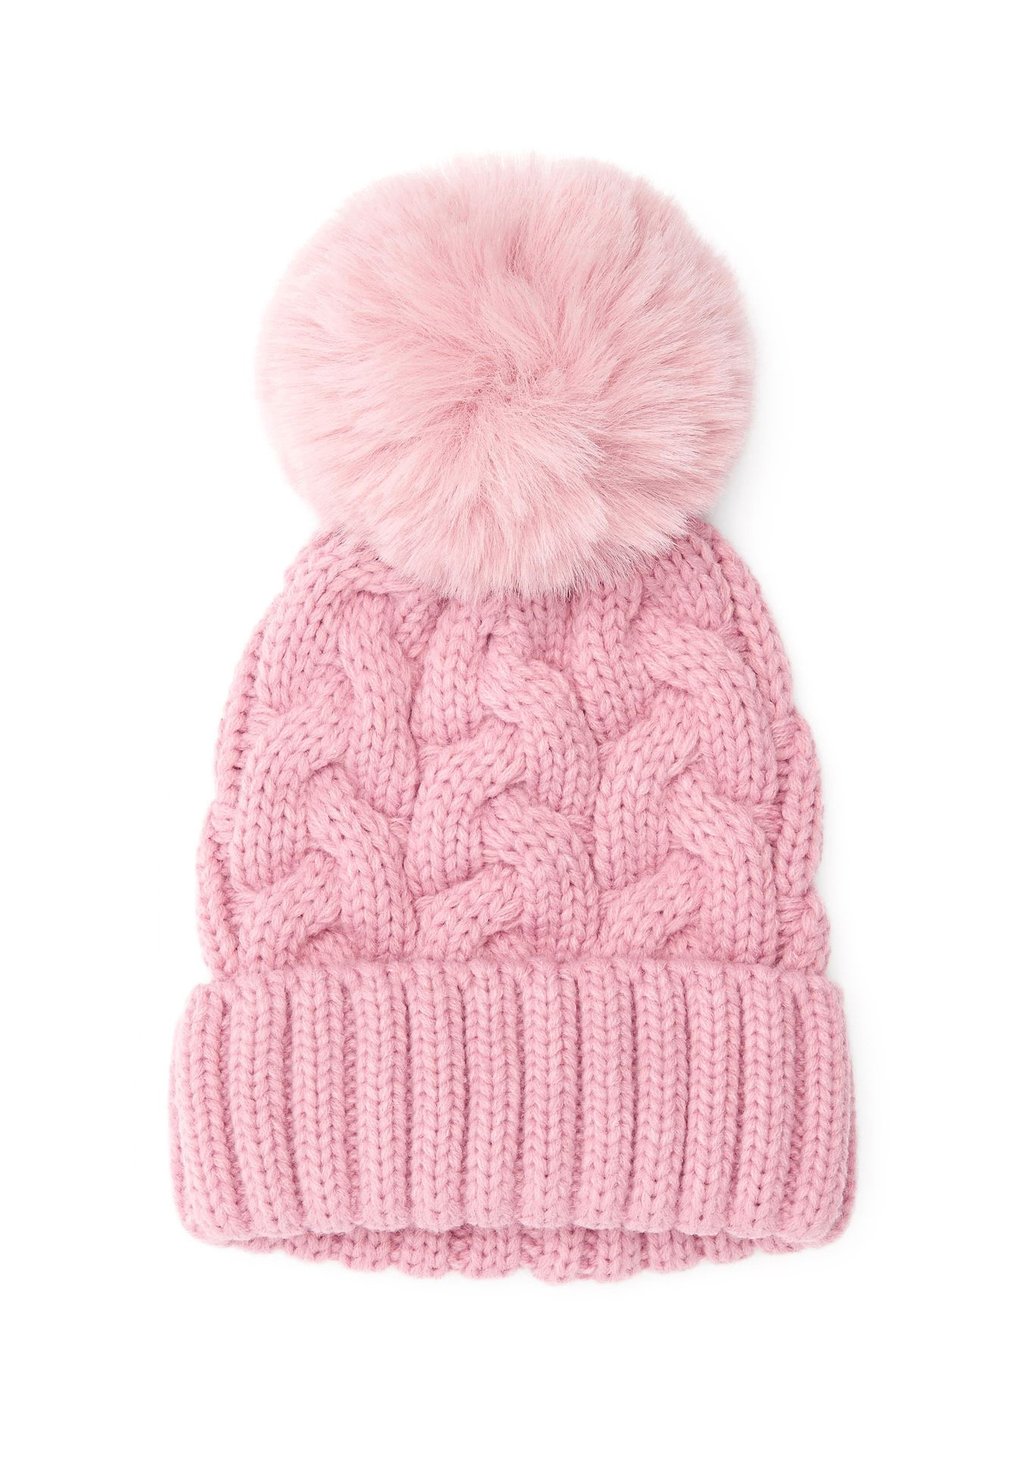 Шапка Cable Pom Pom Next, розовый шапка lightweight knitted pom pom hat next розовый